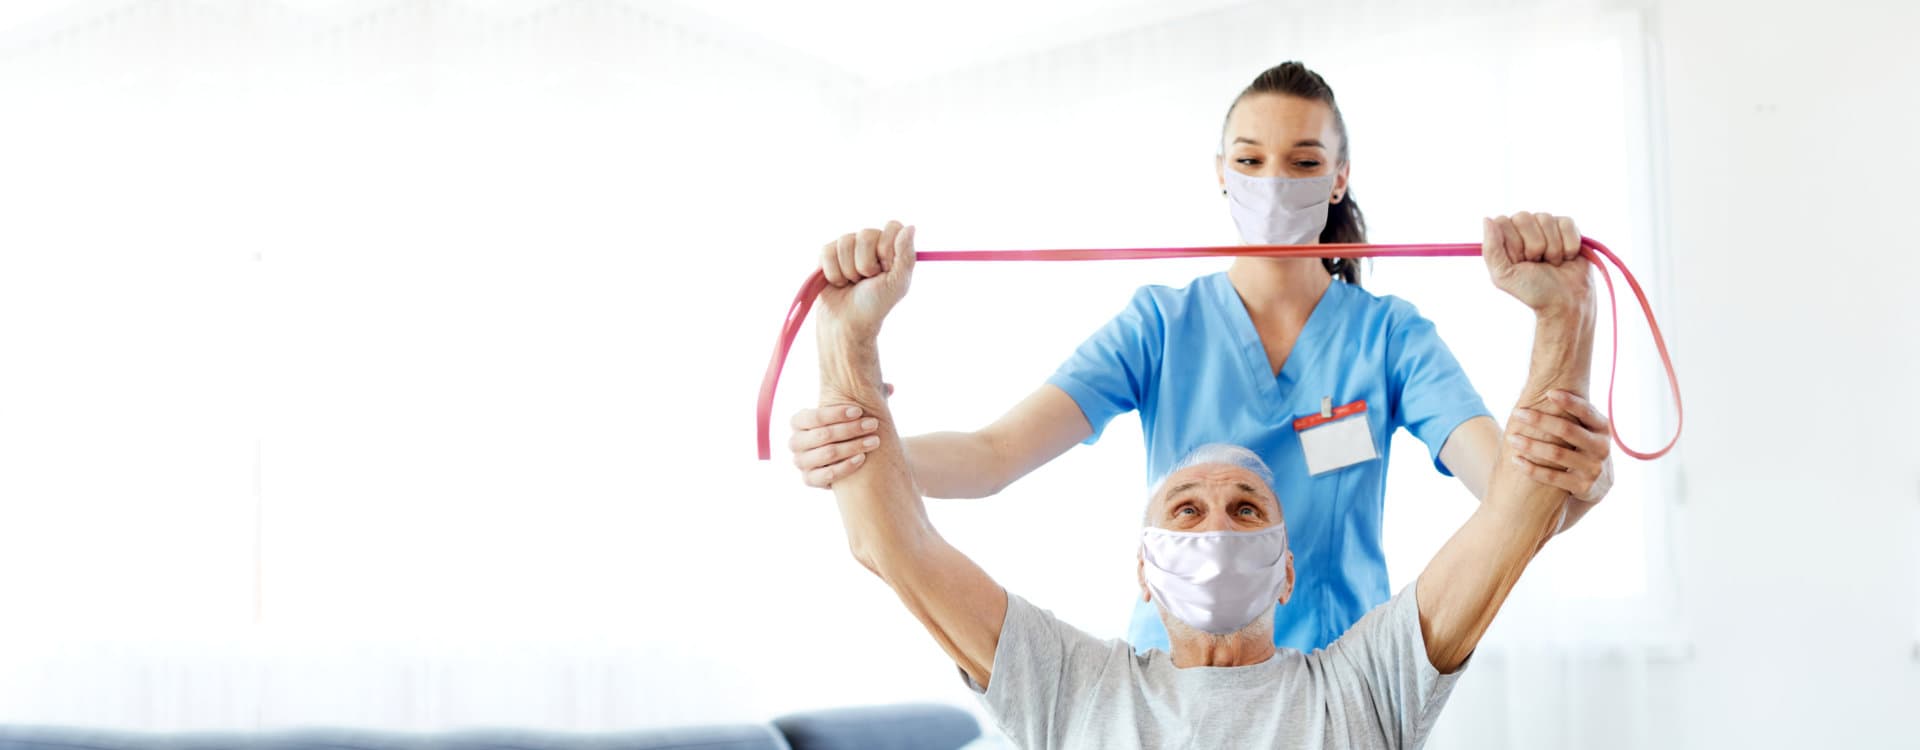 Doctor or nurse caregiver exercise with senior man wearing masks at home or nursing home